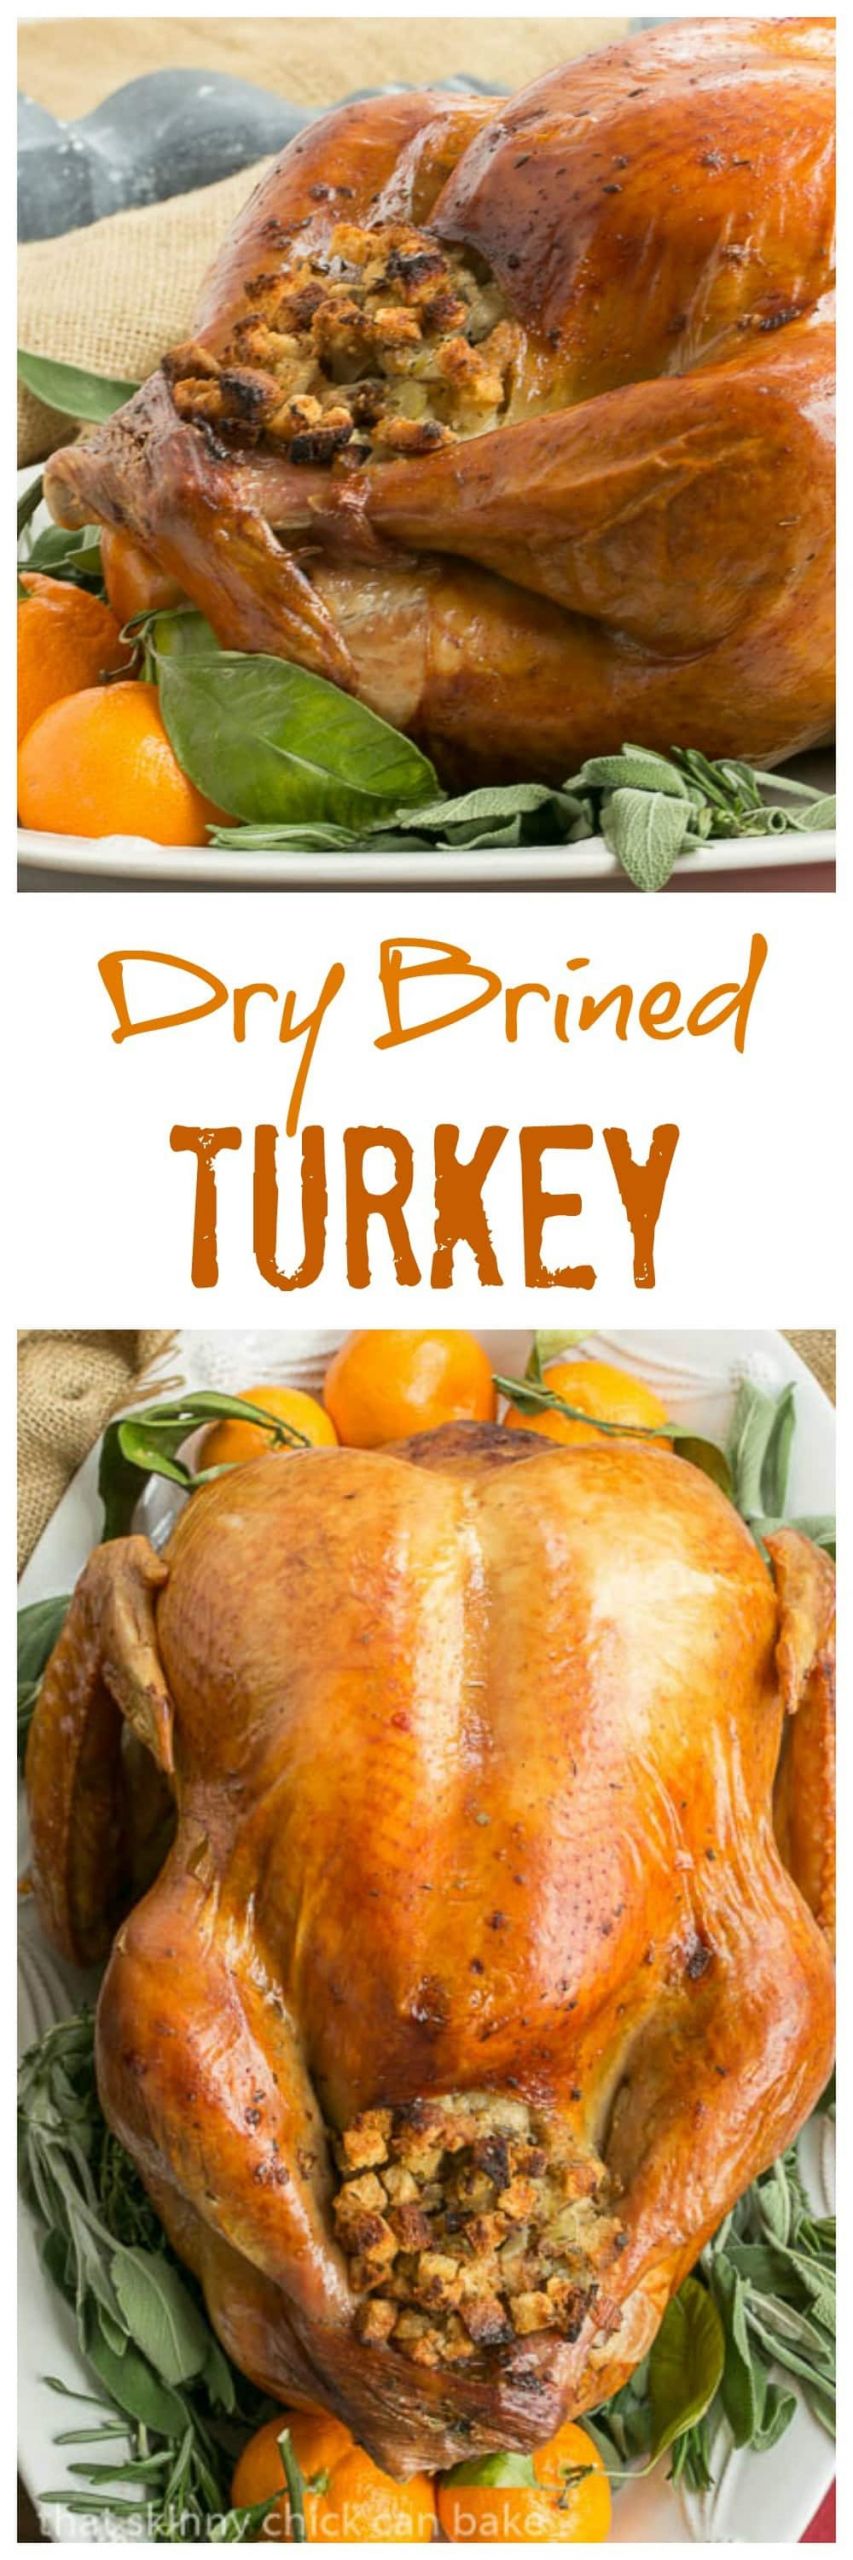 Best Dry Brine For Turkey
 Dry Brined Turkey